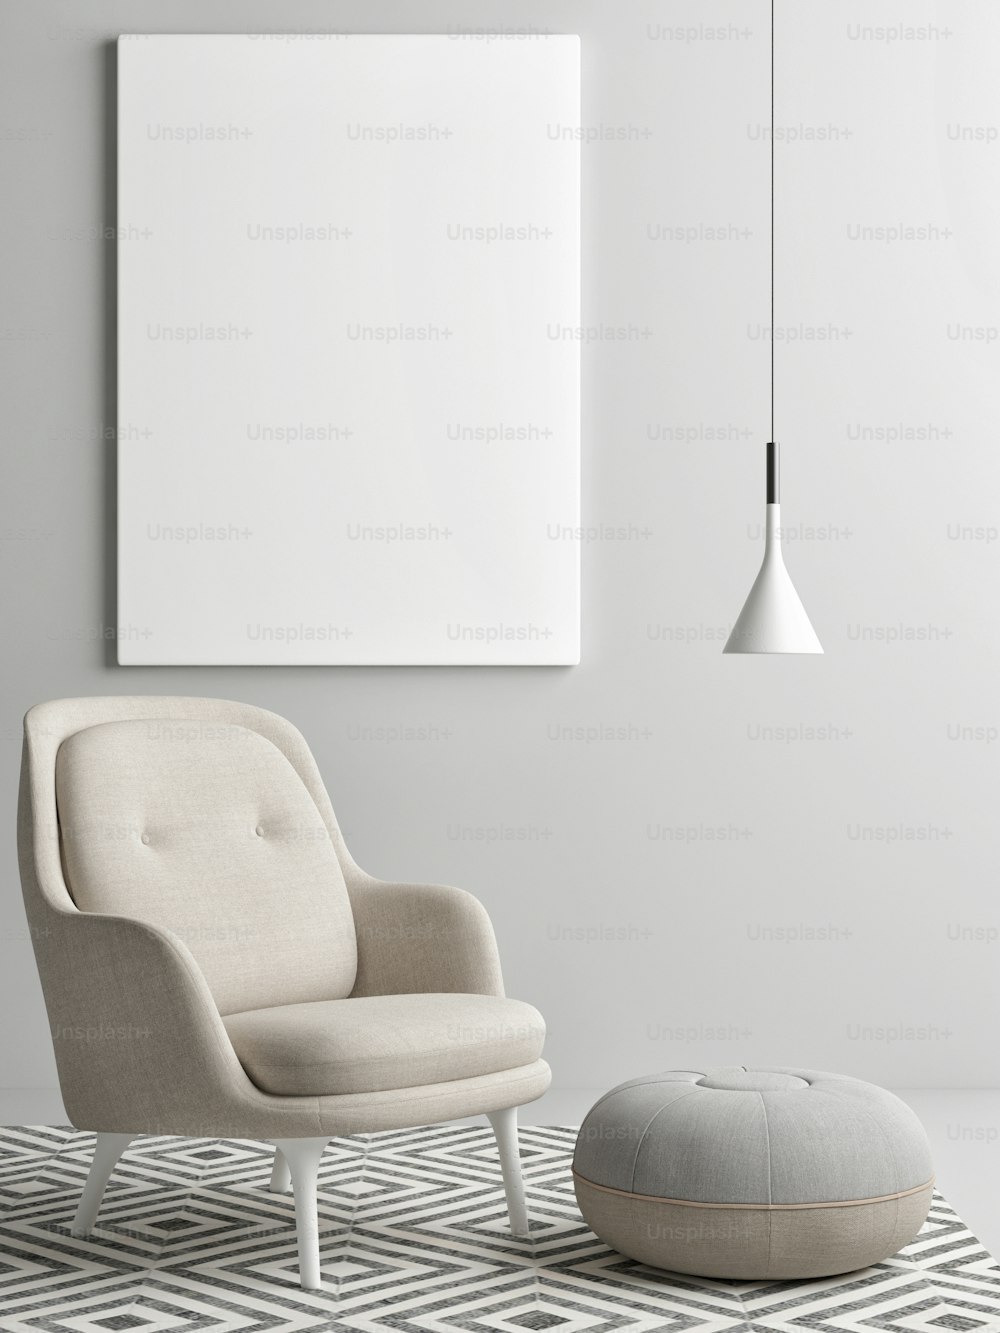 Maqueta de póster Diseño de sala escandinava, póster para presentación de productos, renderizado 3d, ilustración 3d